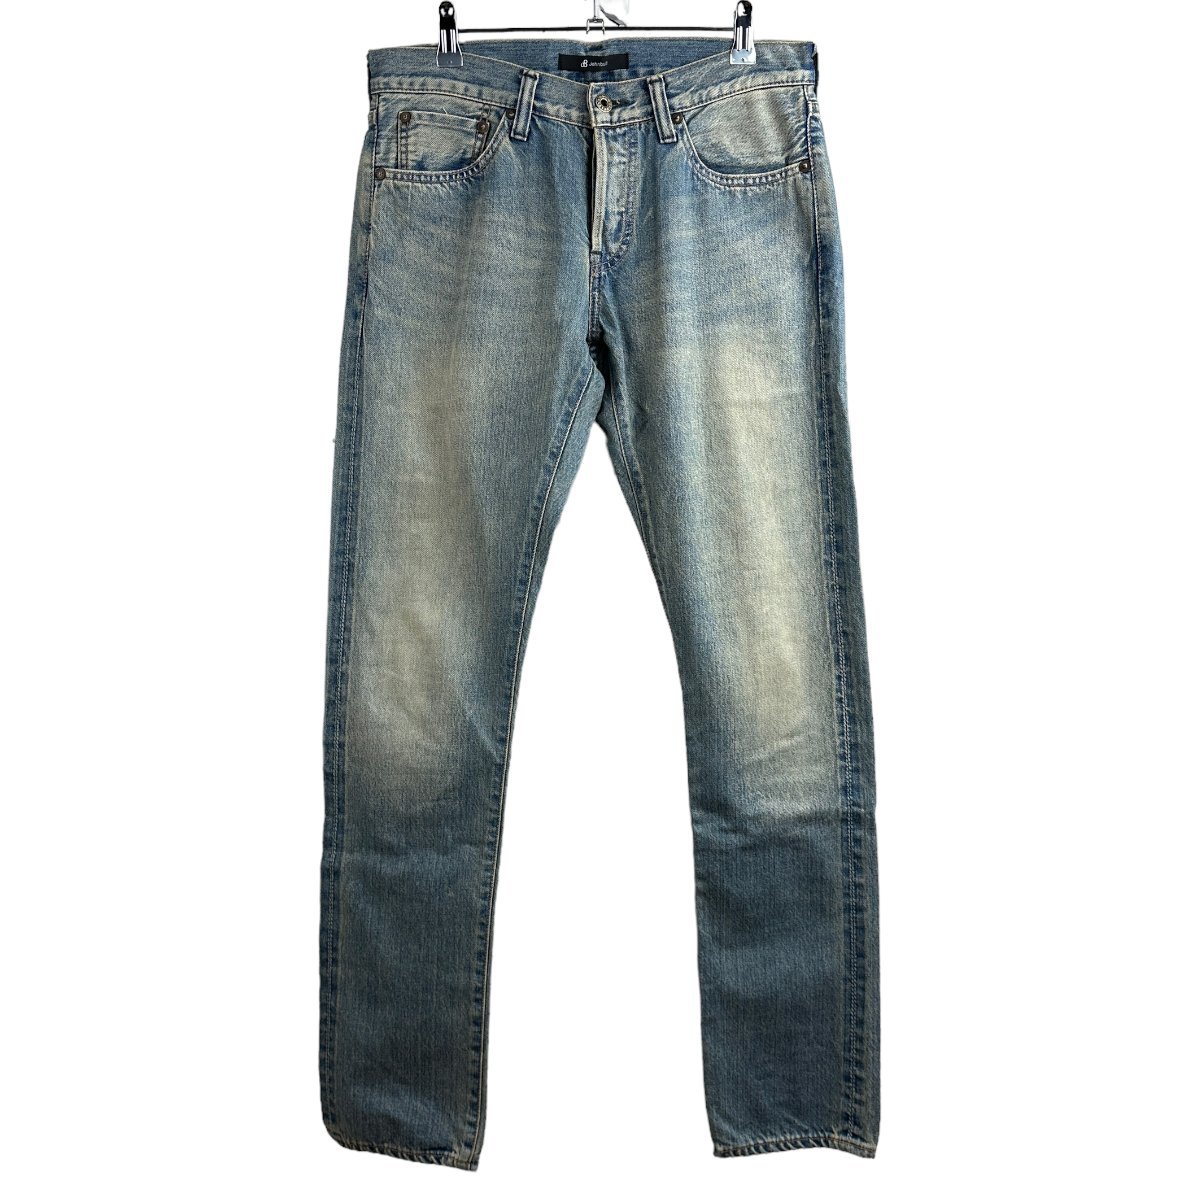 A929# beautiful goods #Johnbull Johnbull # authentic tight strut jeans 11815#30 size men's bottoms Denim 